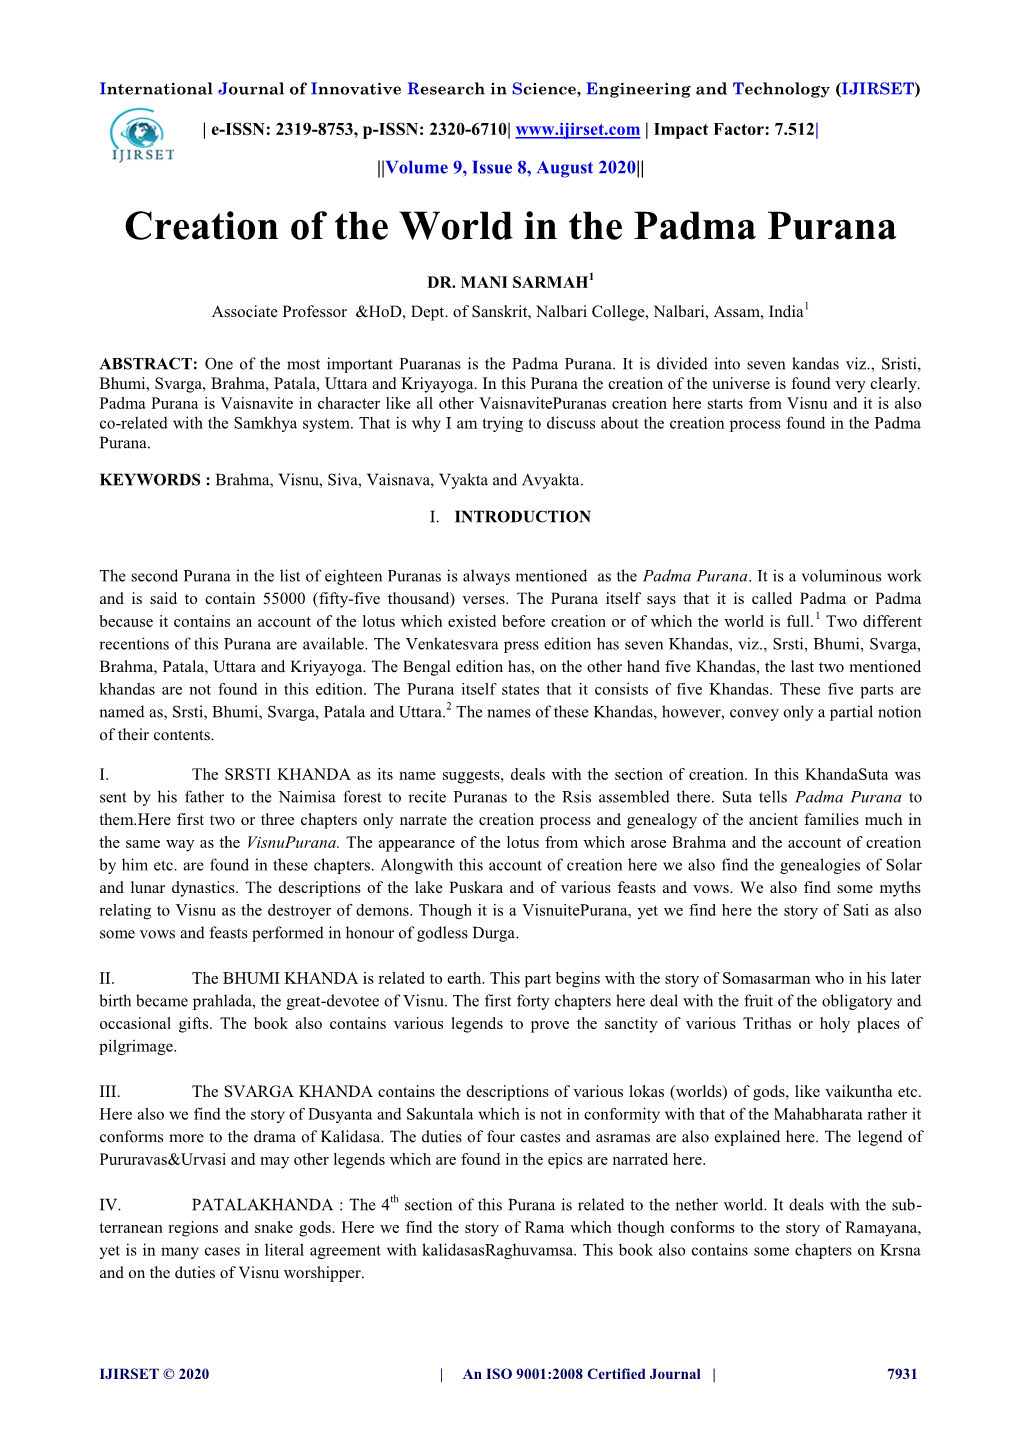 Creation of the World in the Padma Purana